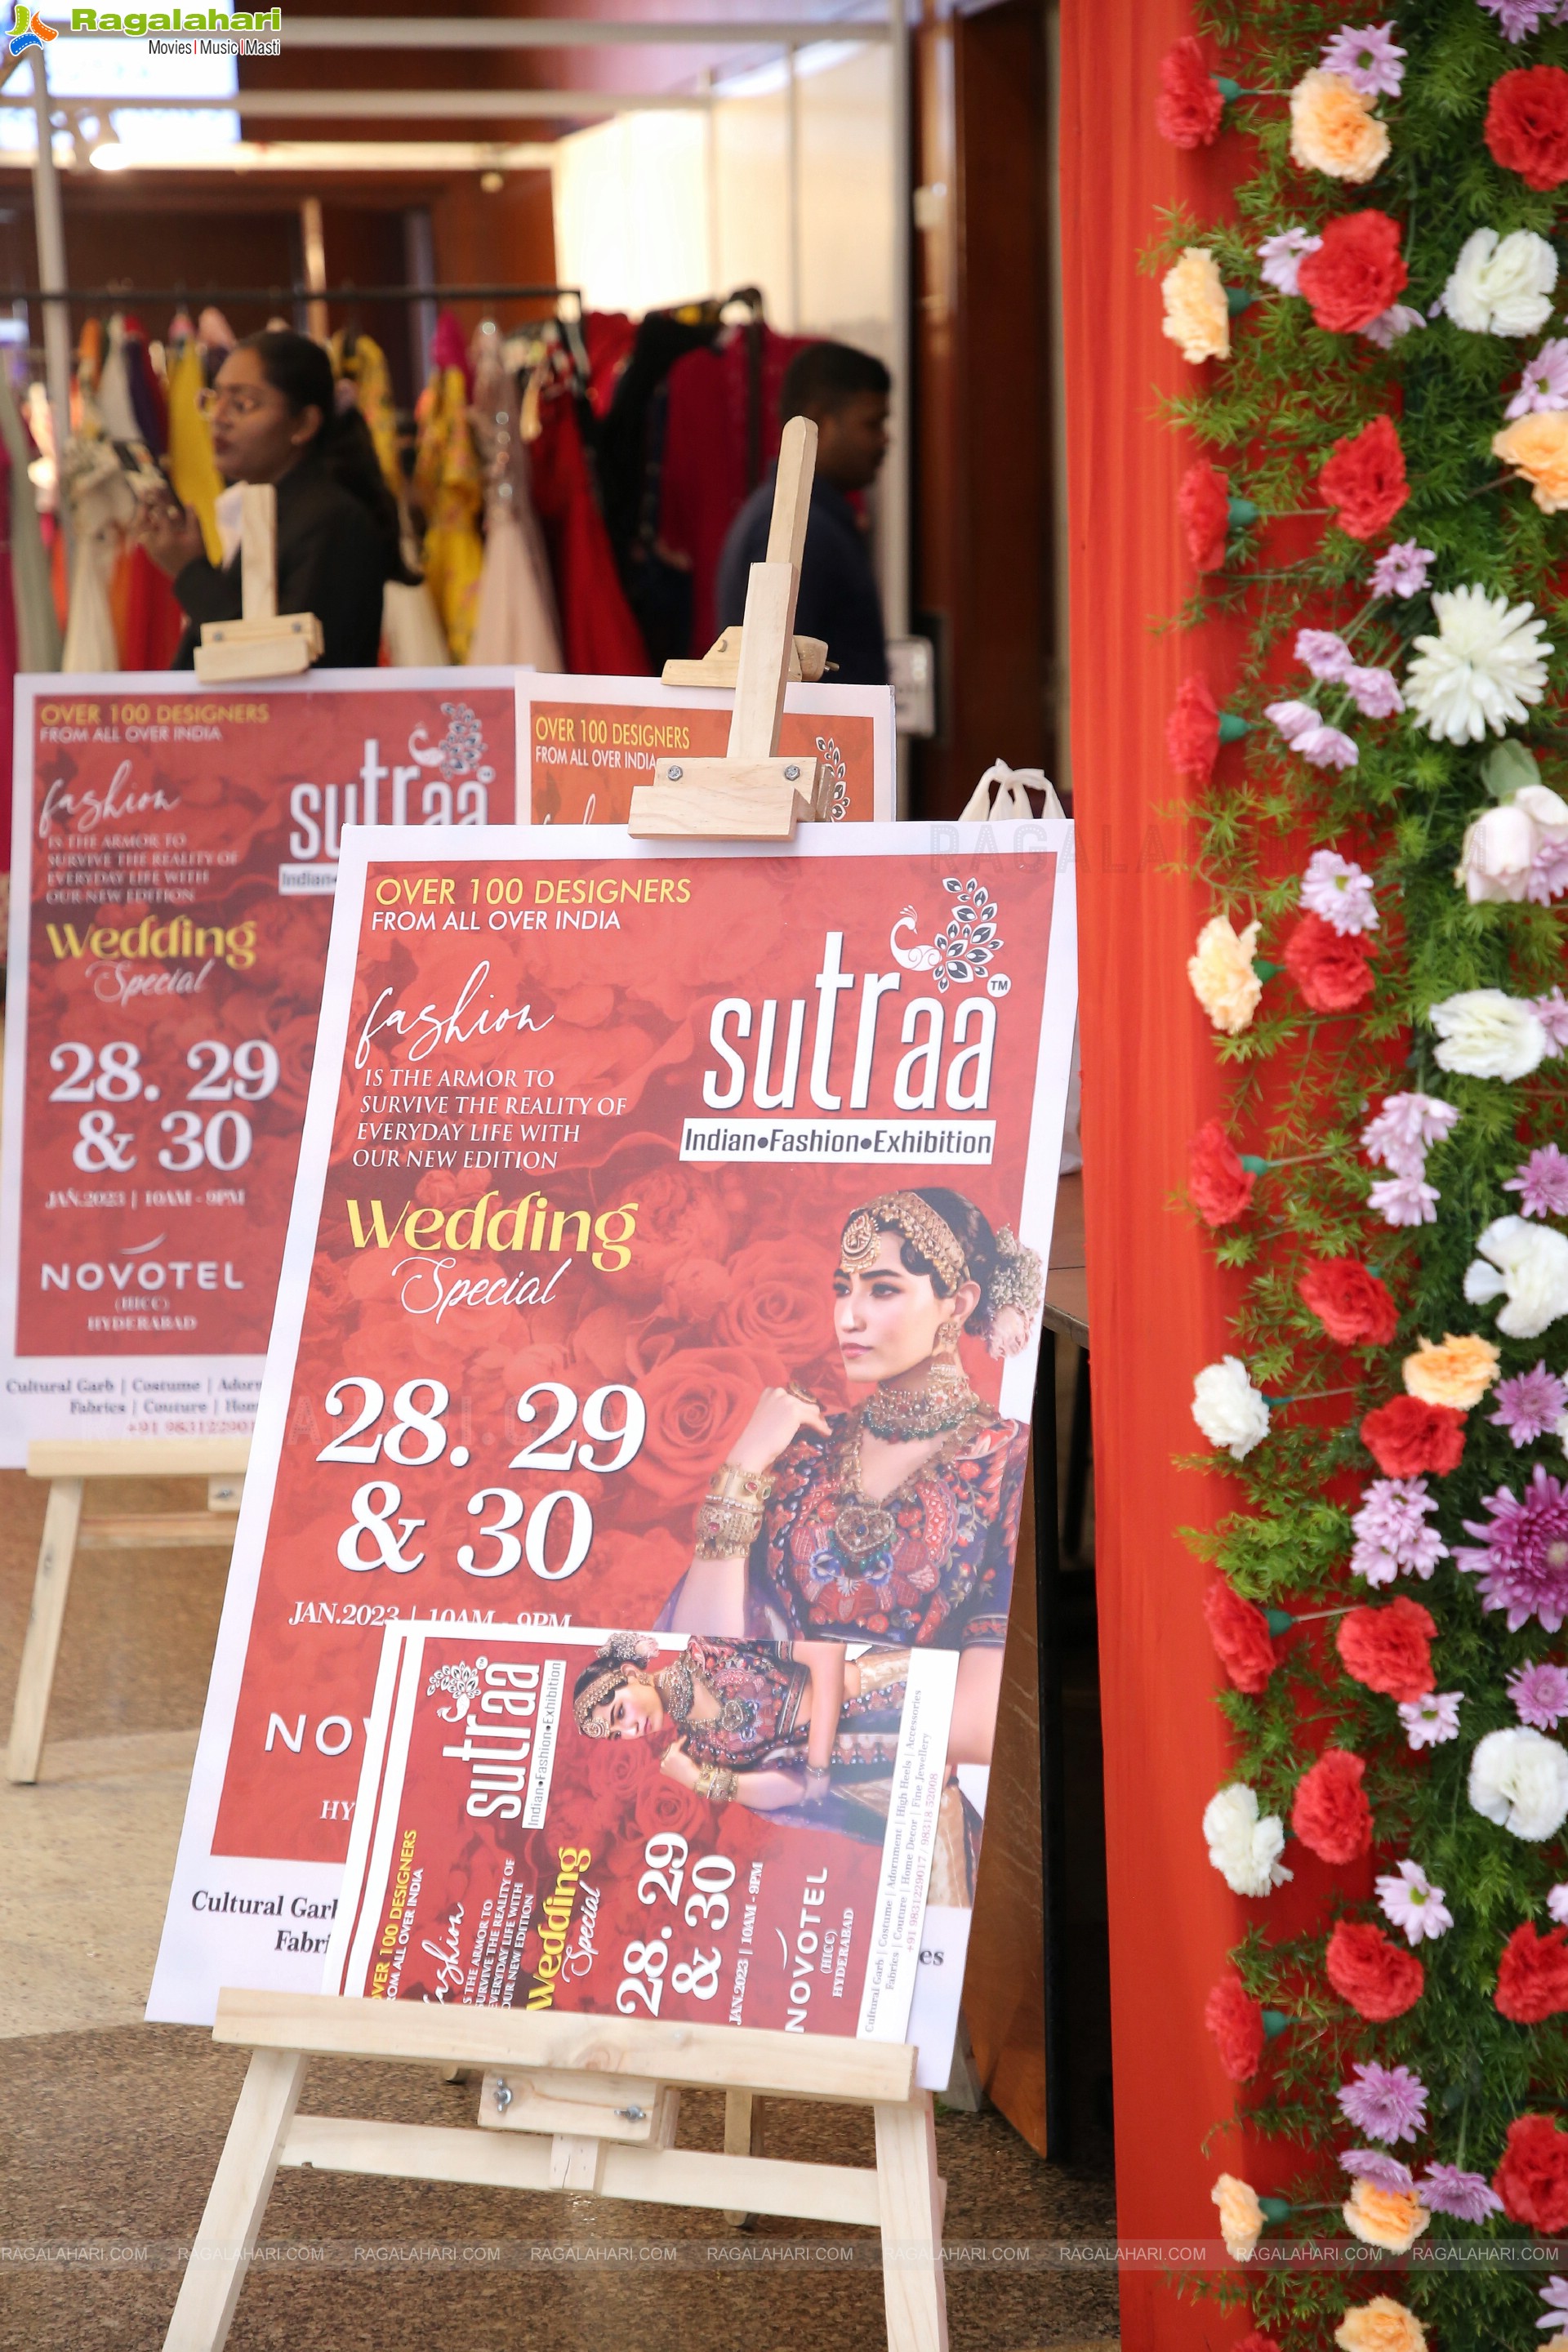 Sutraa Wedding Special January 2023 Begins at HICC-Novotel, Hyderabad